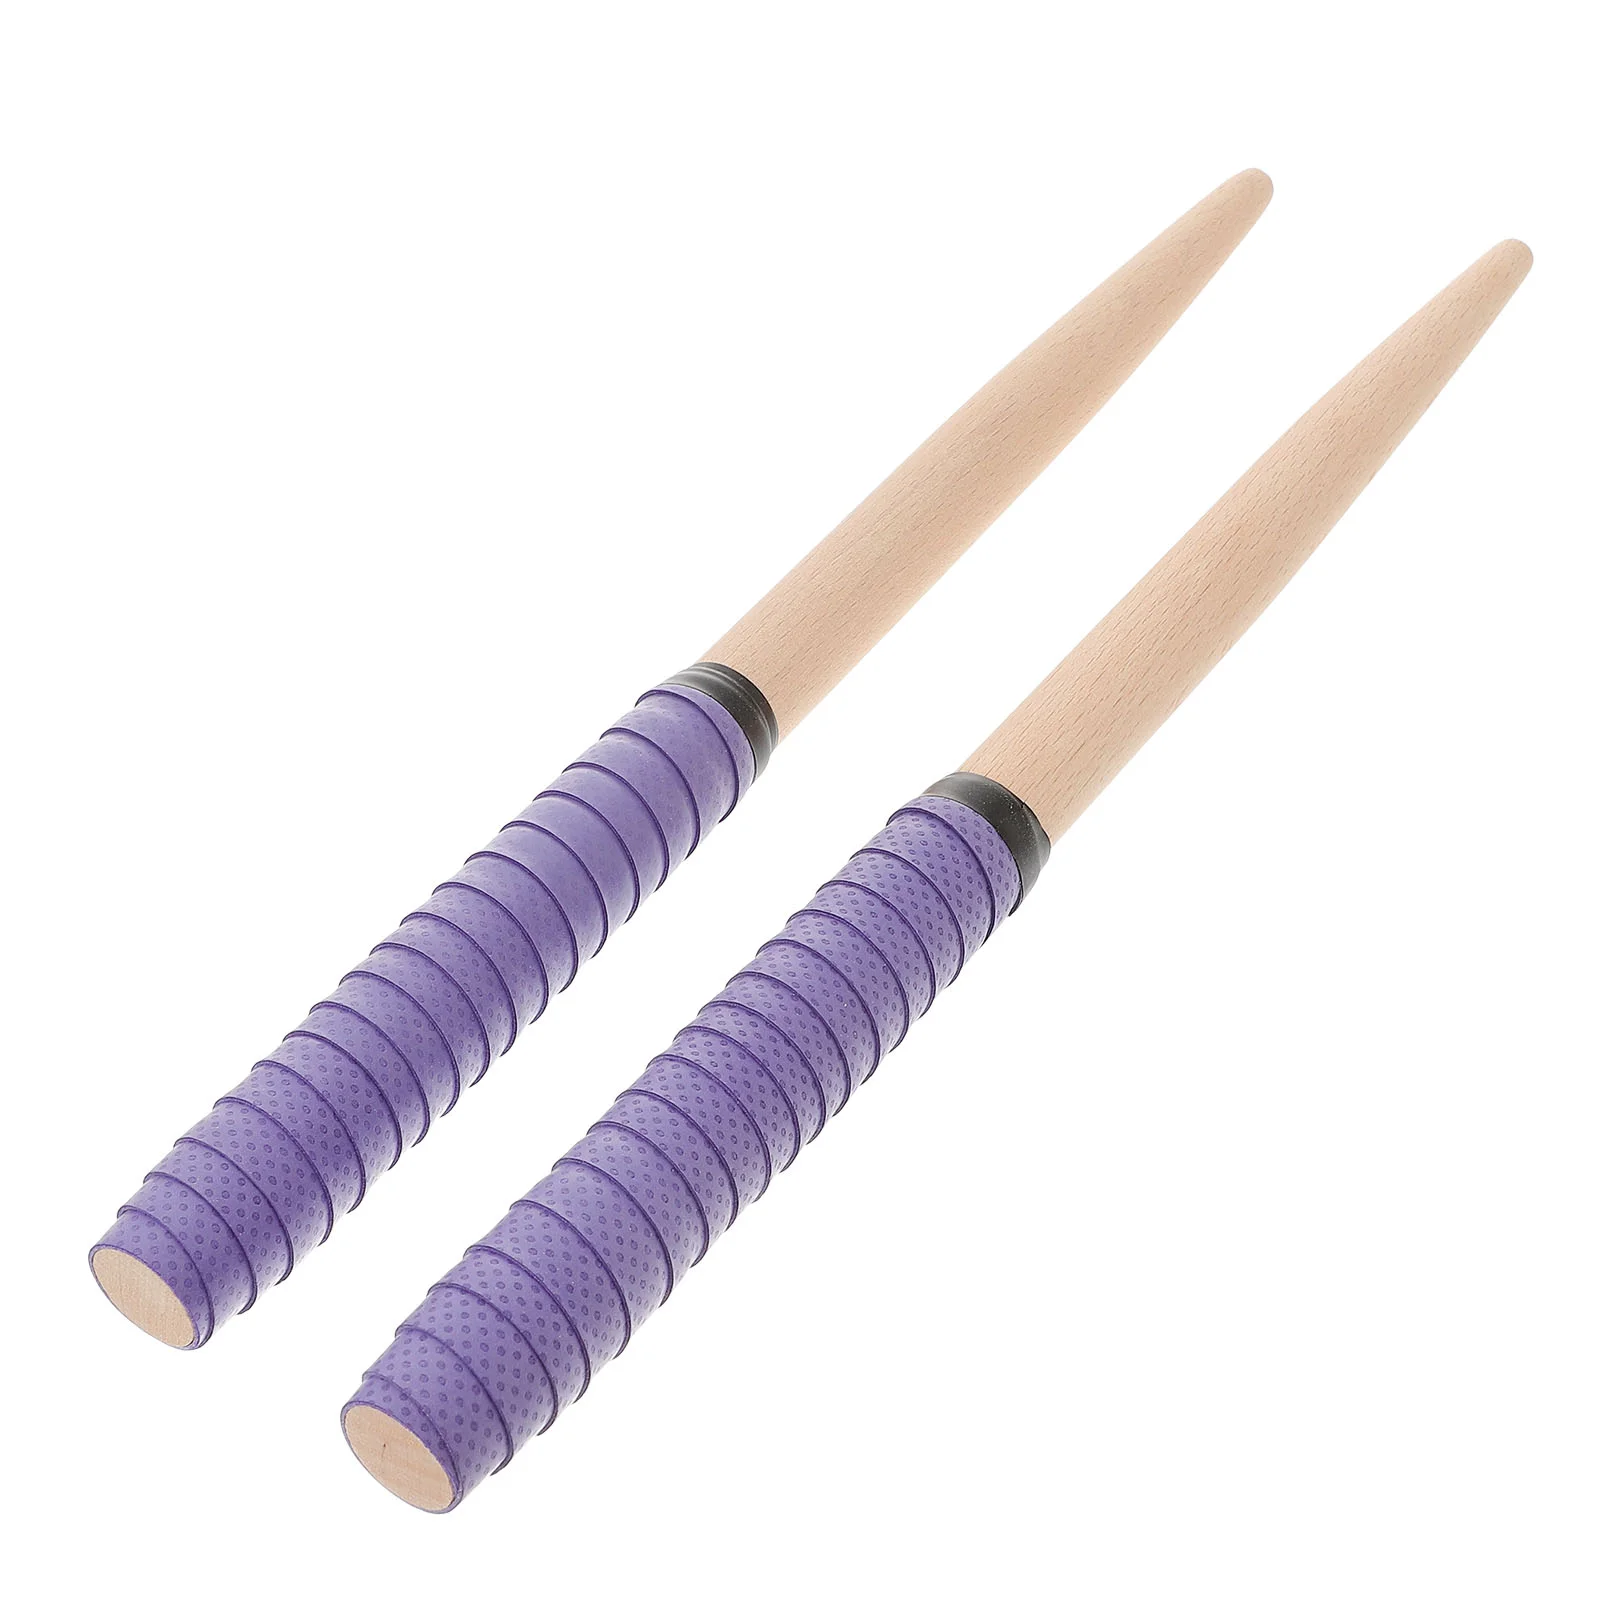 

Drum Taiko Sticks Drumsticks Maibachi Tatsujin Switch Wood Stick Adults Tip Accessories Drumstick Tape Pad Mallets Mallet Wooden